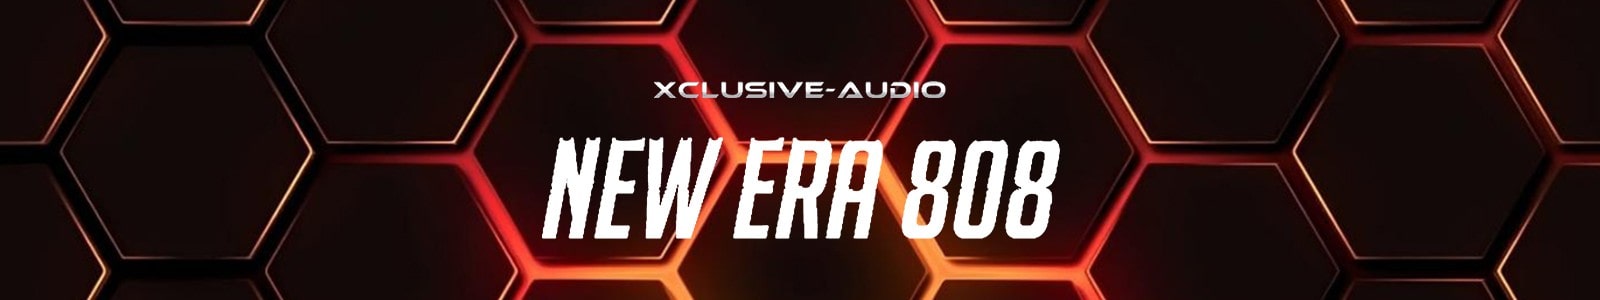 Xclusive Audio New Era 808 Deluxe Bundle